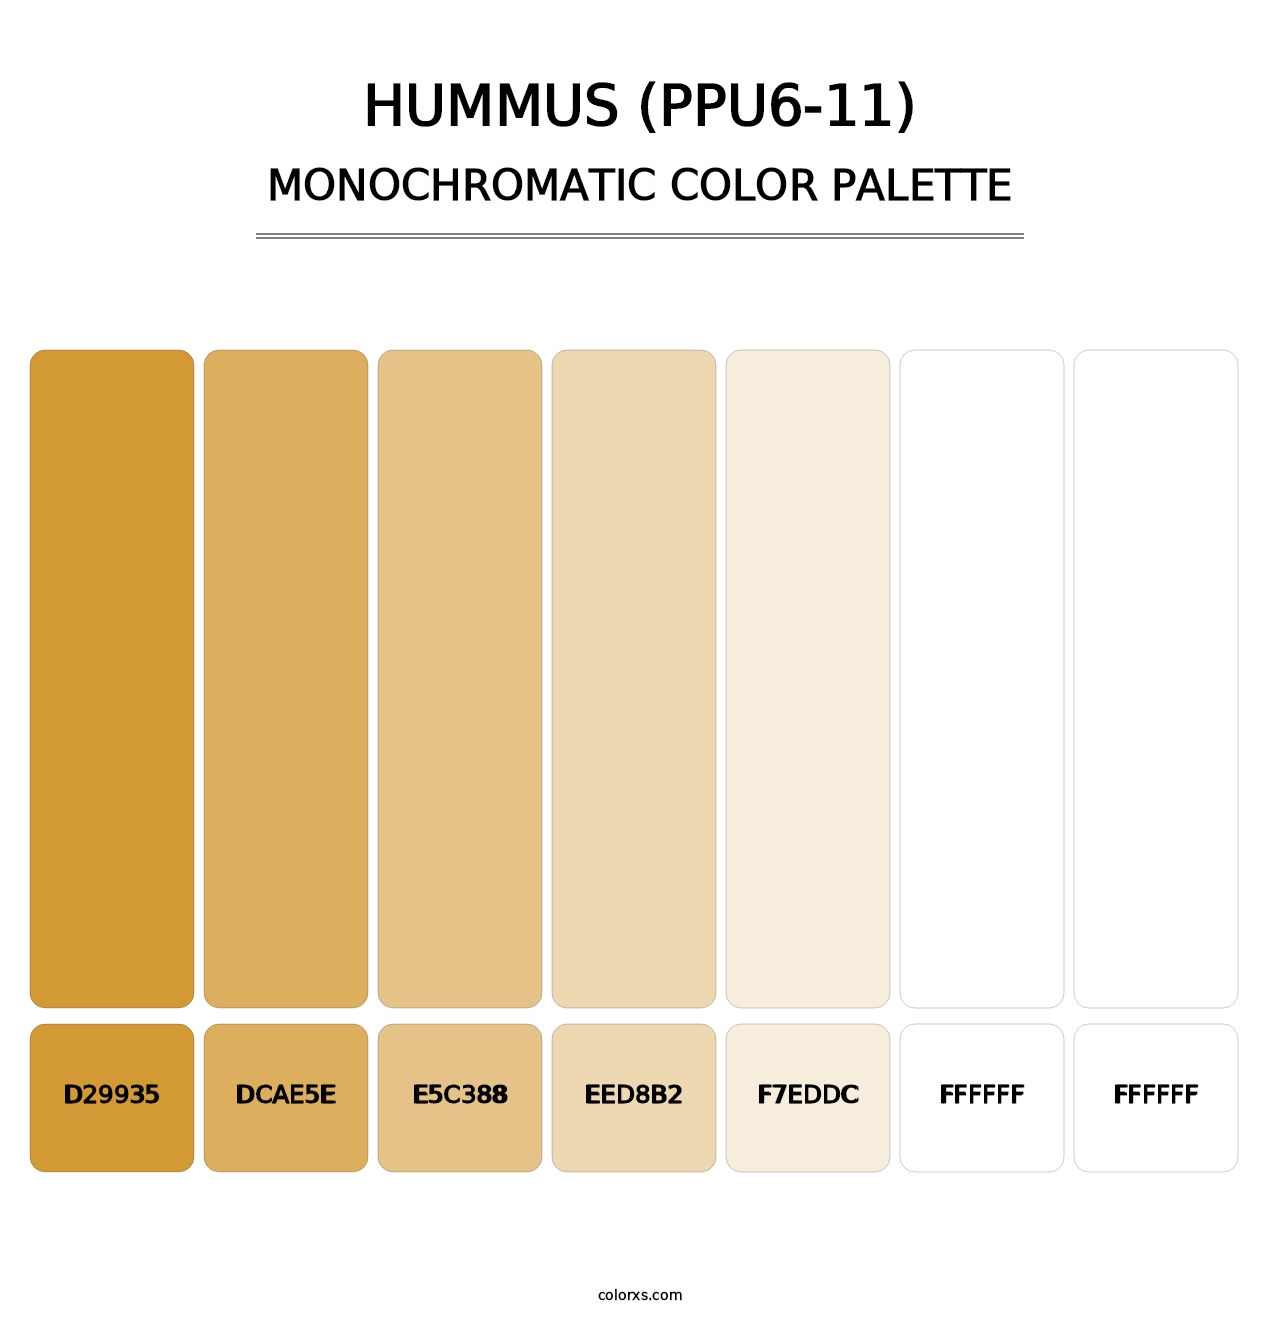 Hummus (PPU6-11) - Monochromatic Color Palette